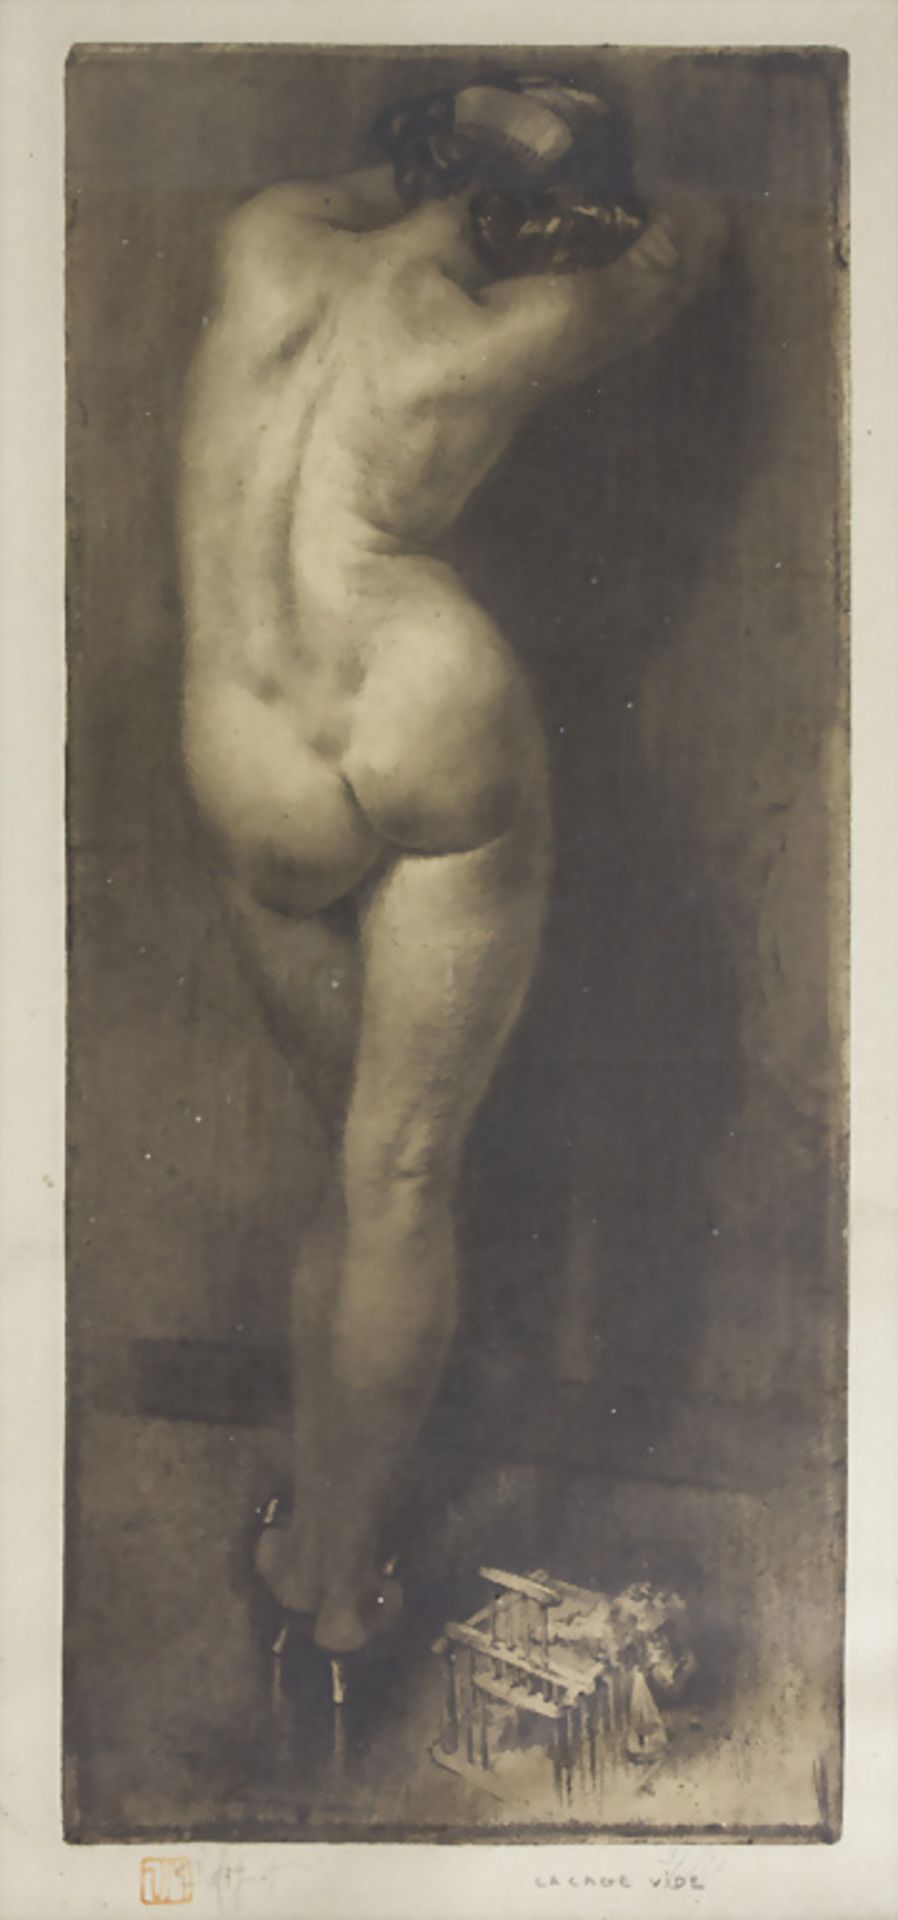 Victor Mignot (1872-1944), 'La cage vide (Rückenakt)' / 'The empty cage (female rear nude)', ...